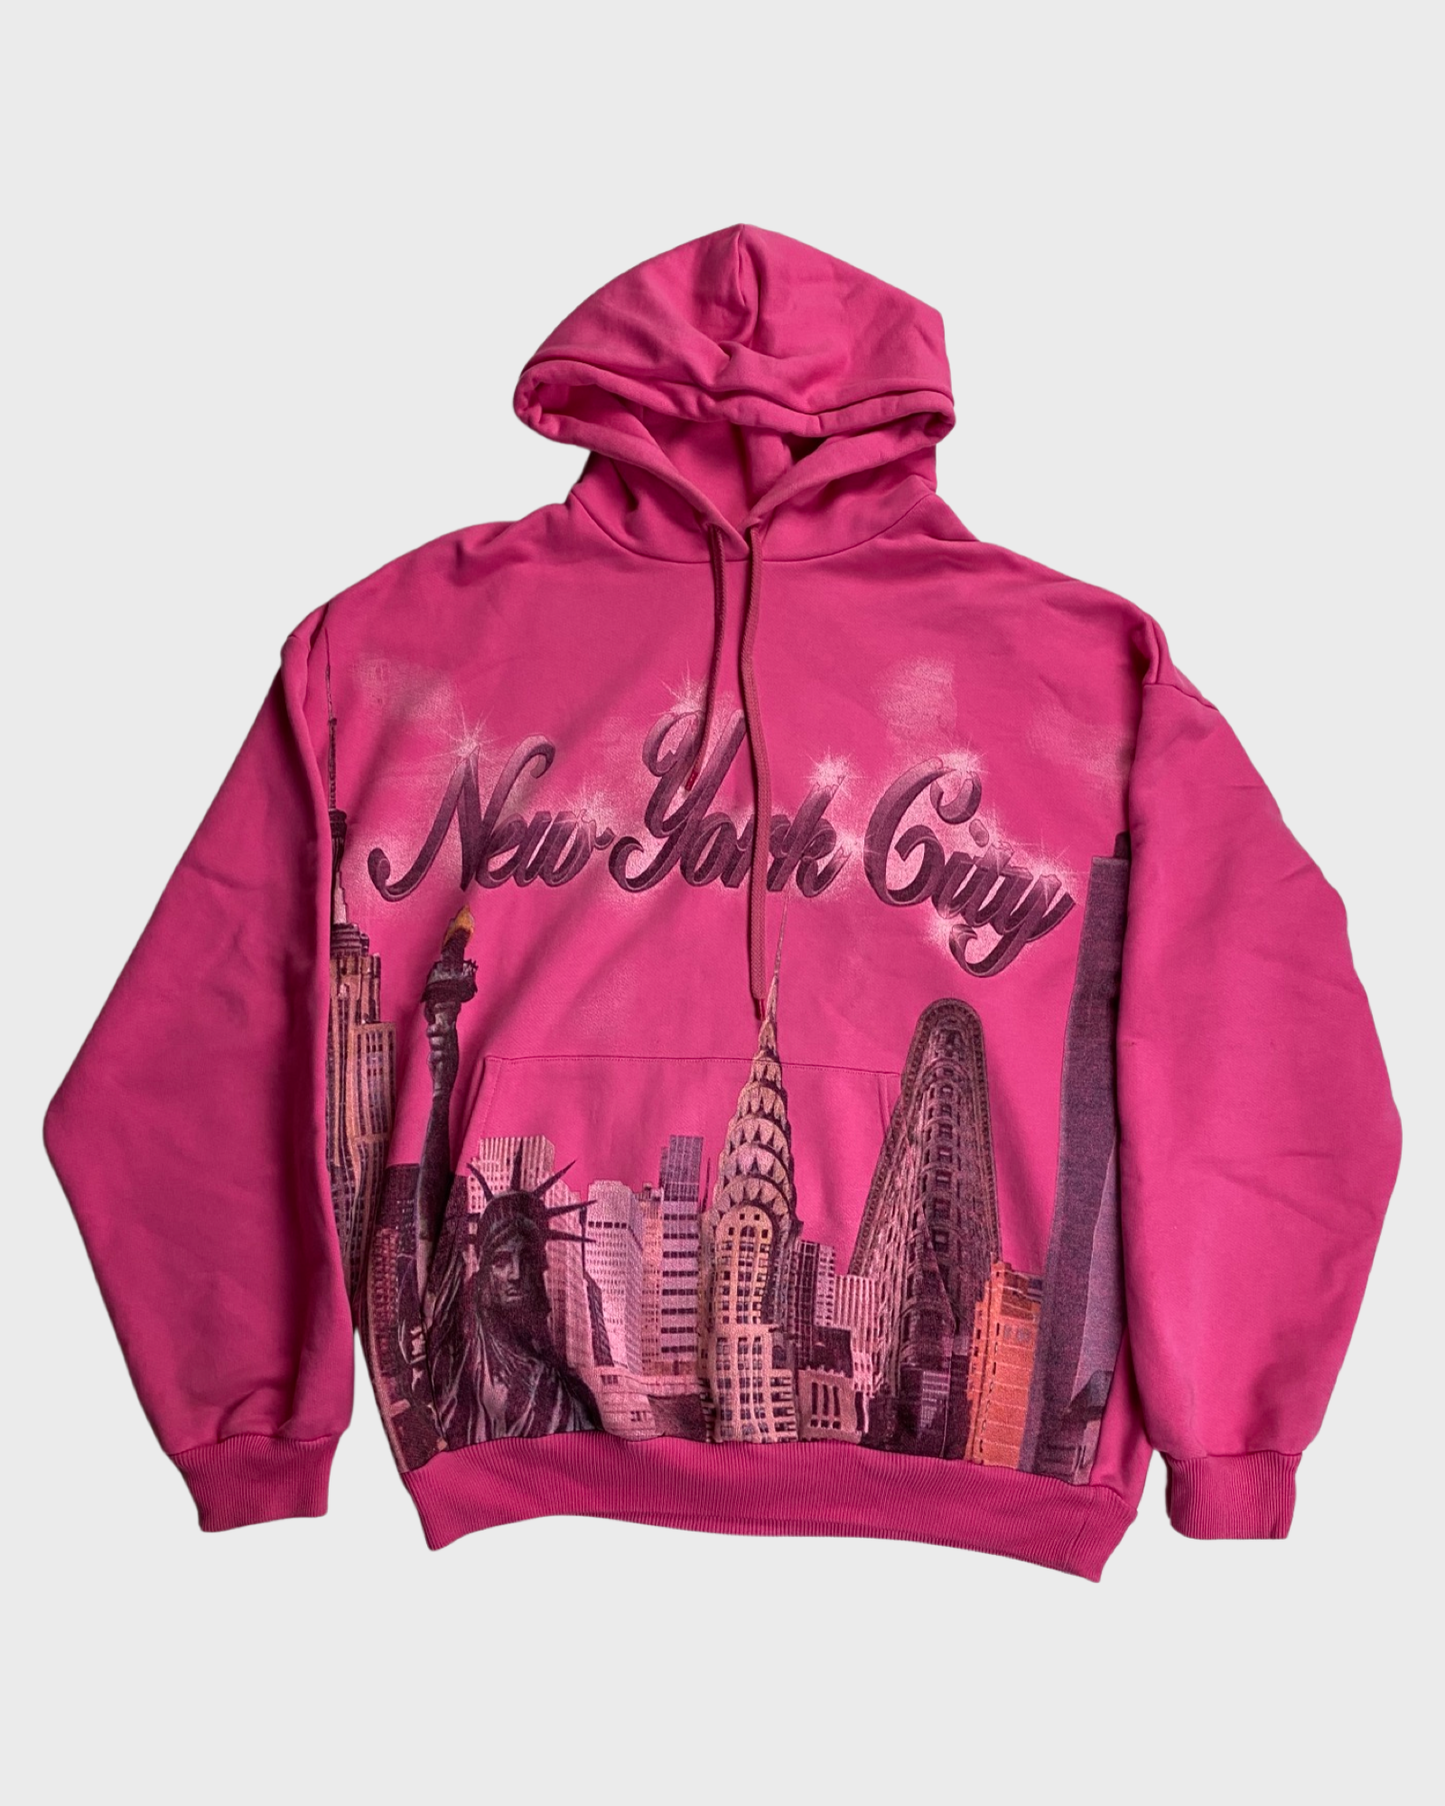 Balenciaga NYC pink airbrushed oversized hoodie SZ:XS|S|M